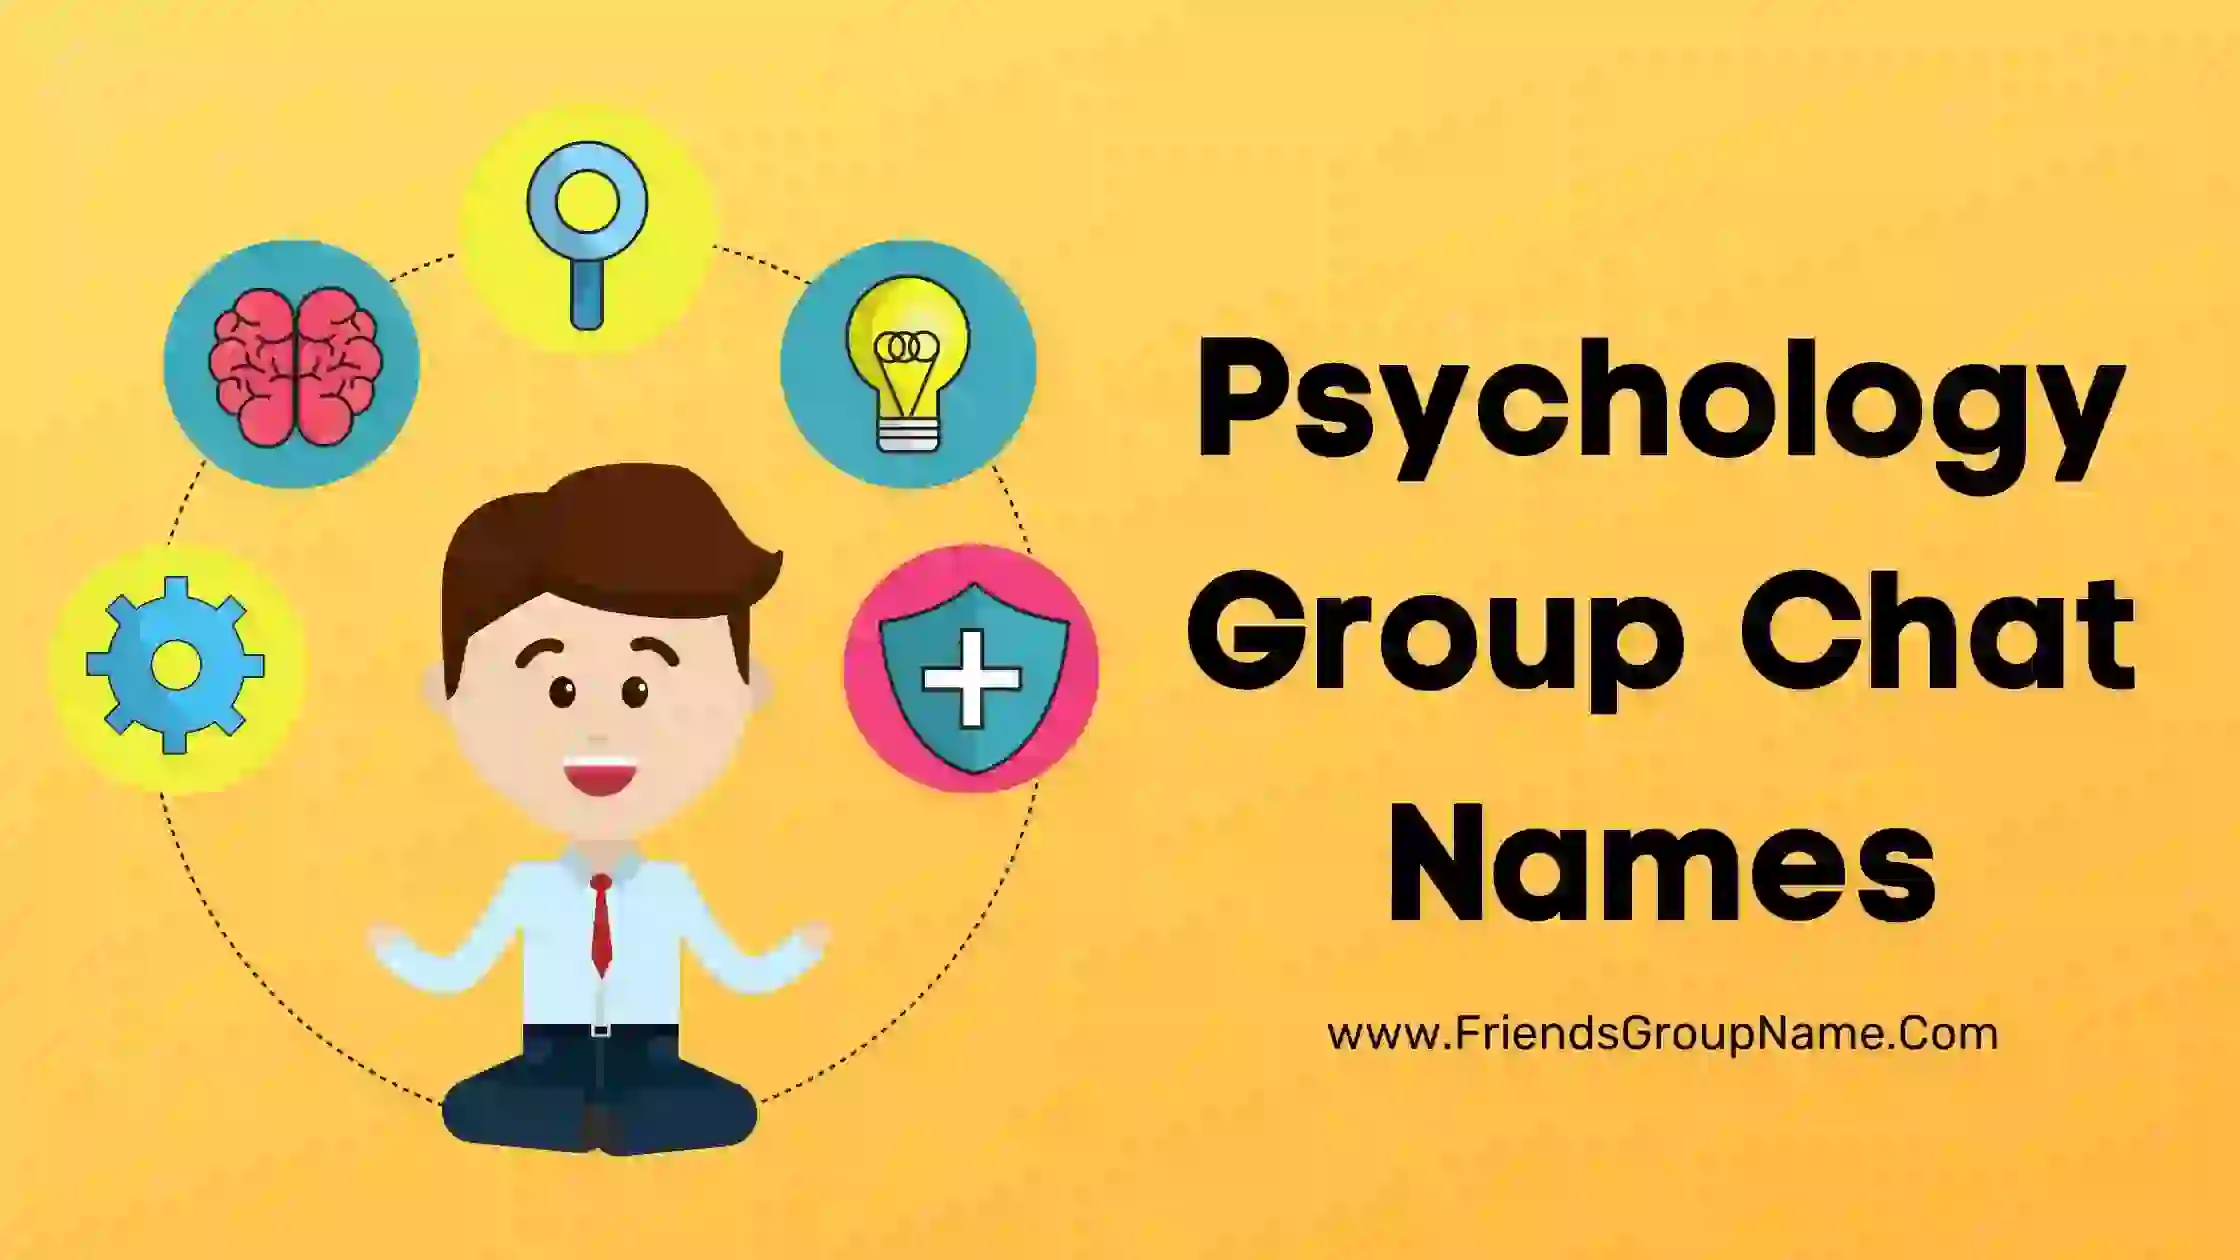 Psychology Group Chat Names